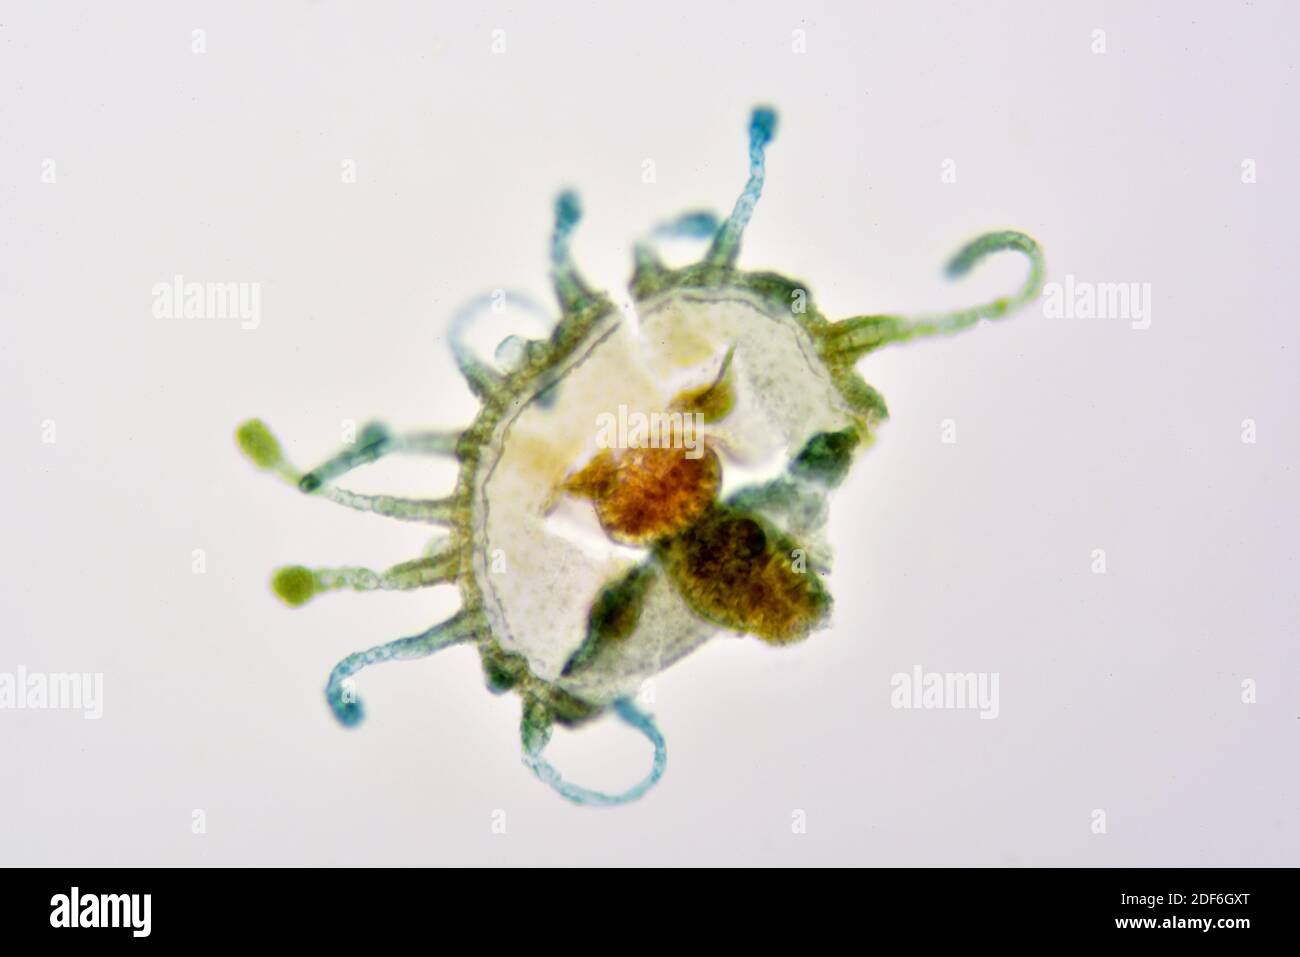 Fourrure de mer (Obelia sp. ) stade de medusa. Microscope optique X200. Banque D'Images